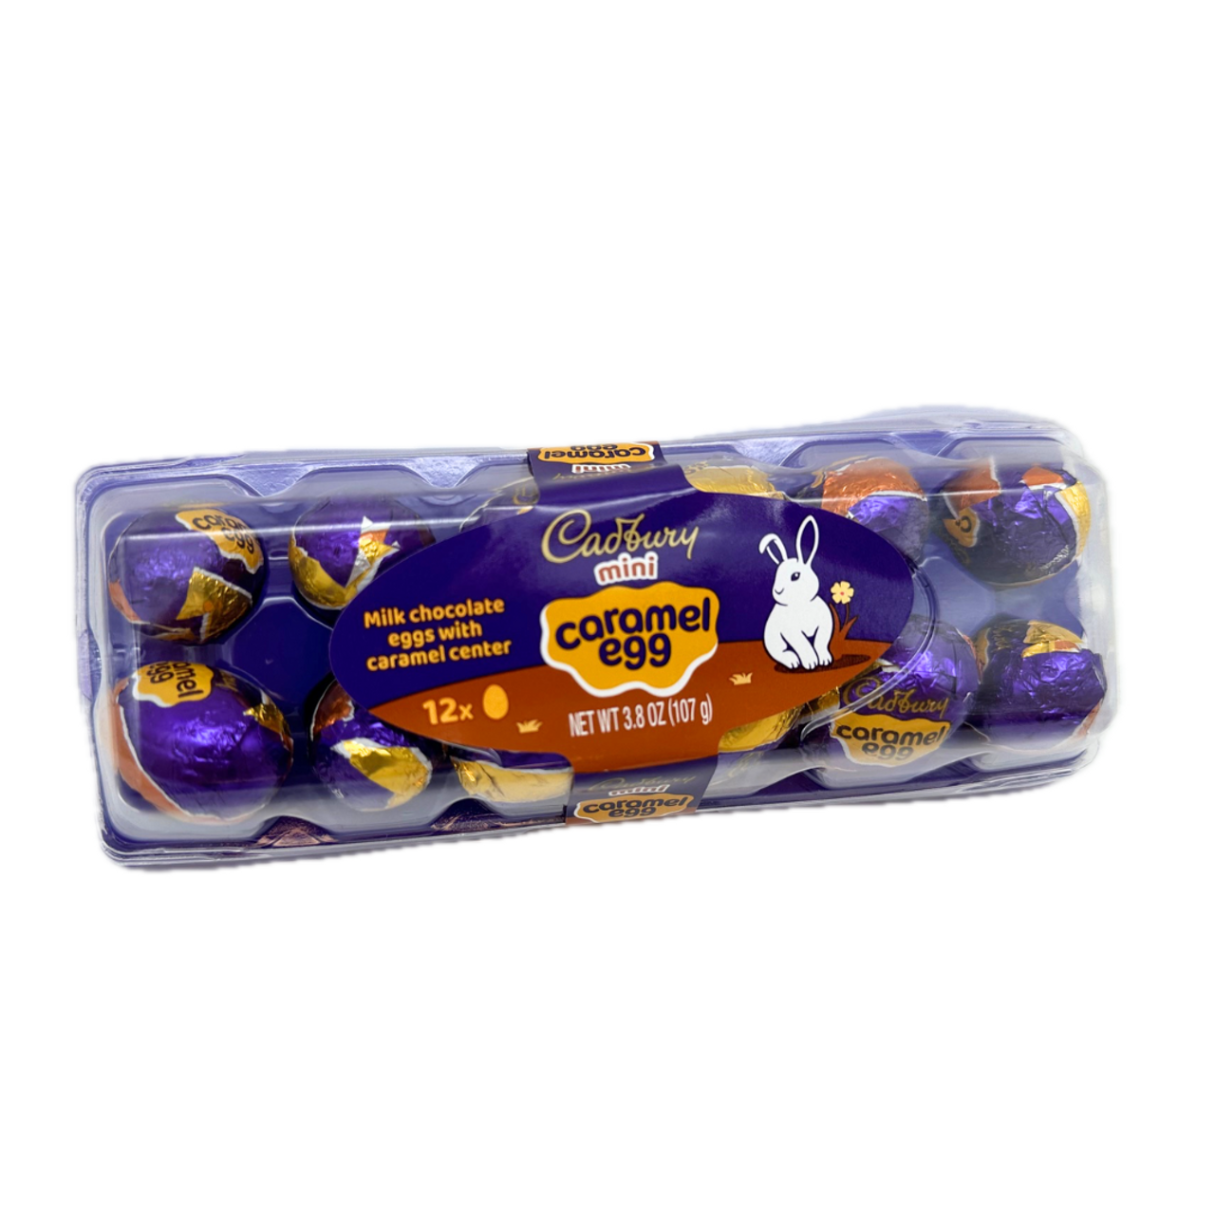 Cadbury Mini "Caramel" Eggs 3.8oz - 6ct